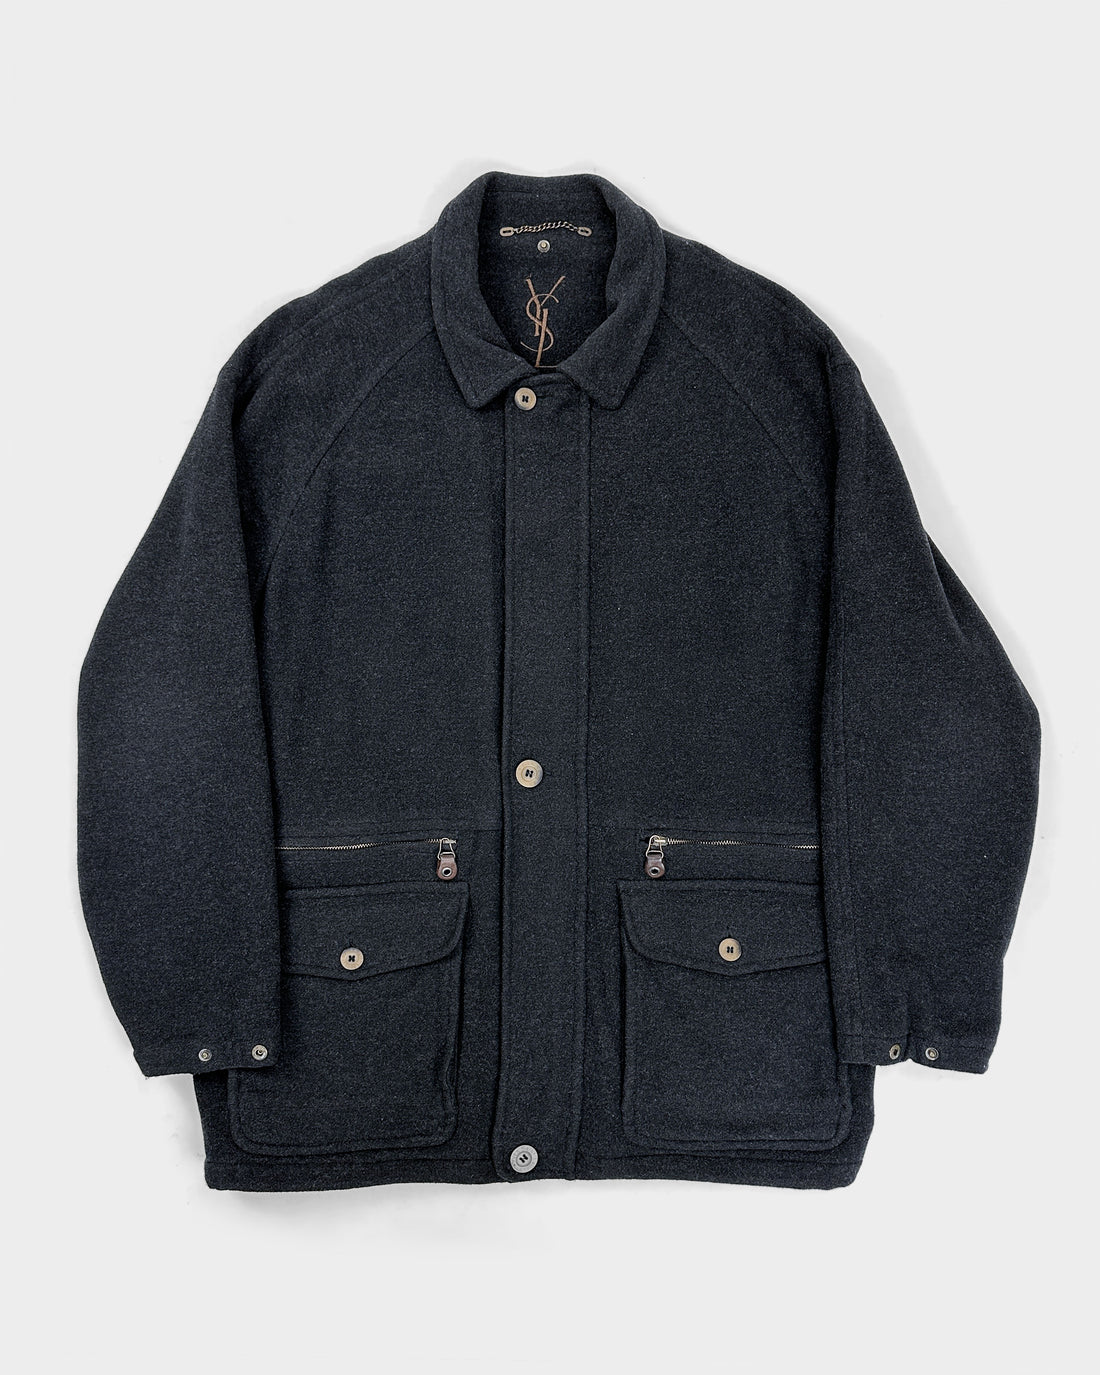 Yves Saint Laurent Wool Black Long Jacket 1990's